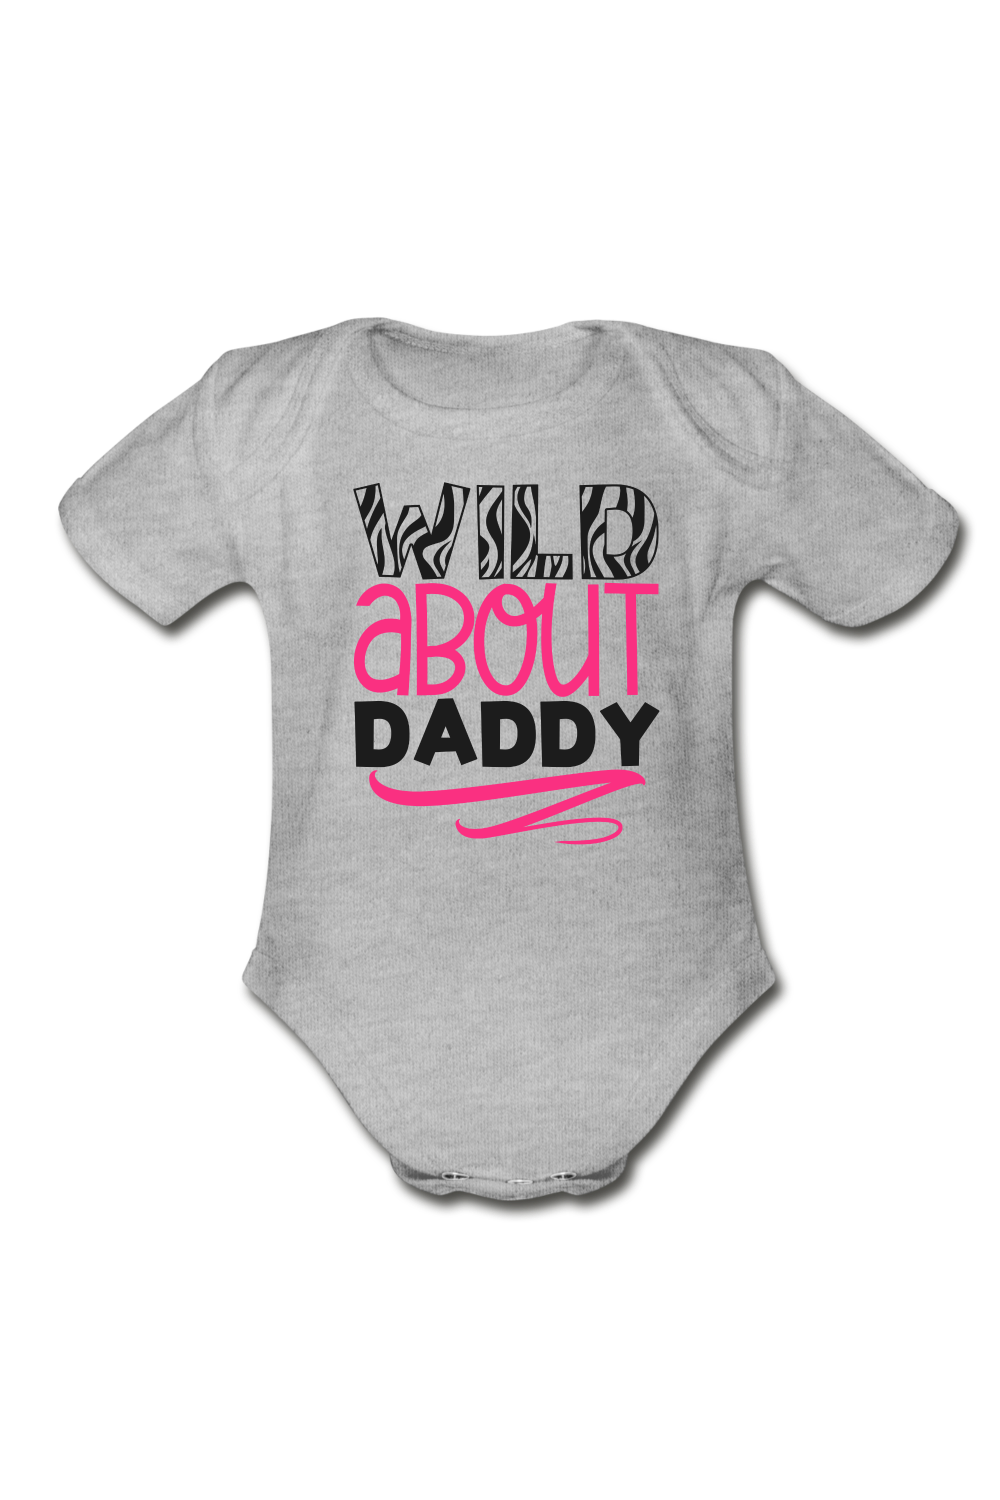 Baby Girl Wild About Daddy Short Sleeve Baby Bodysuit - heather grey - NicholesGifts.online